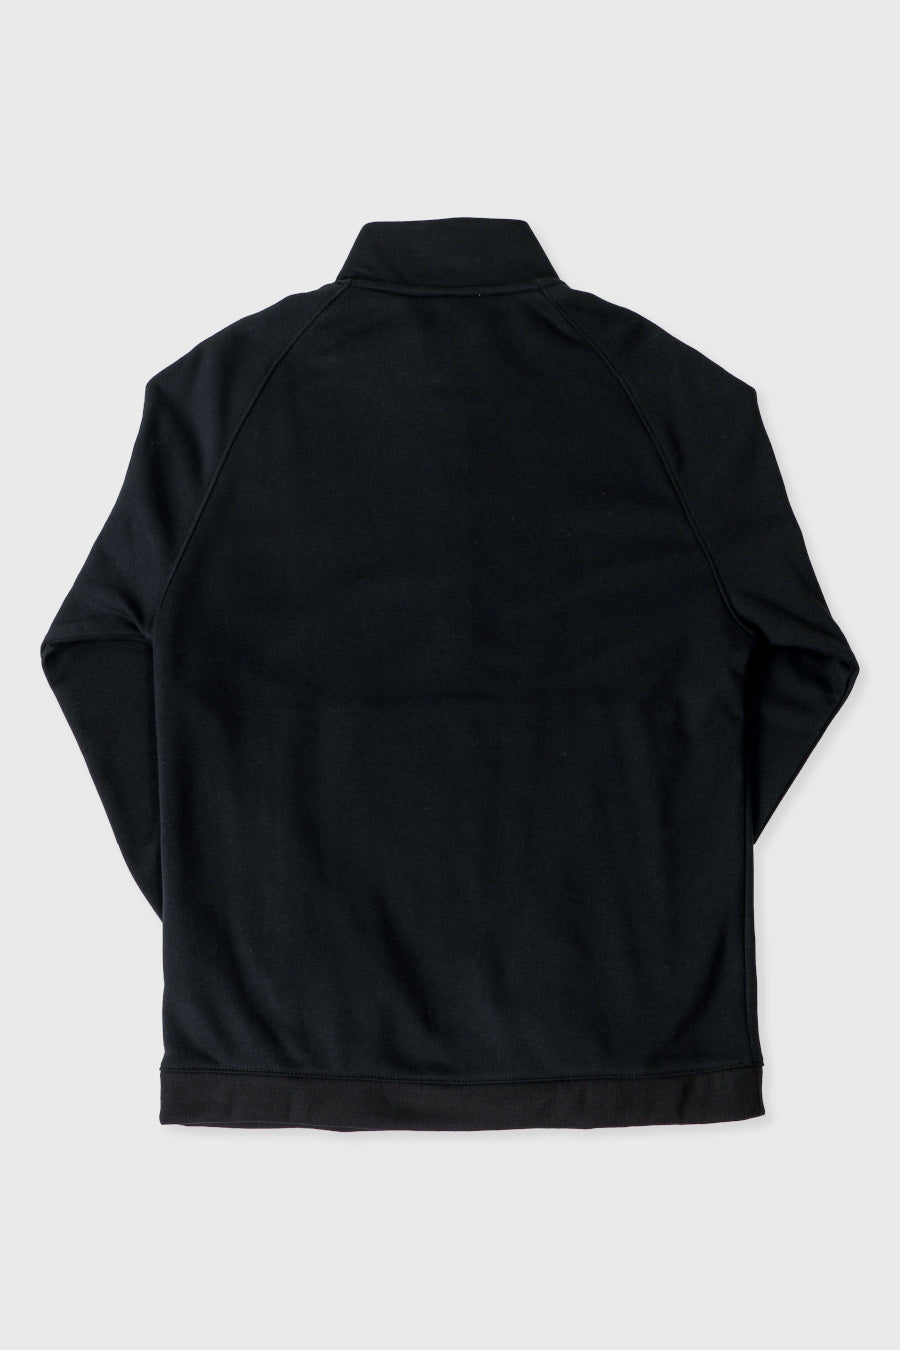 1/4 Zip Sweat Shirts(Black)